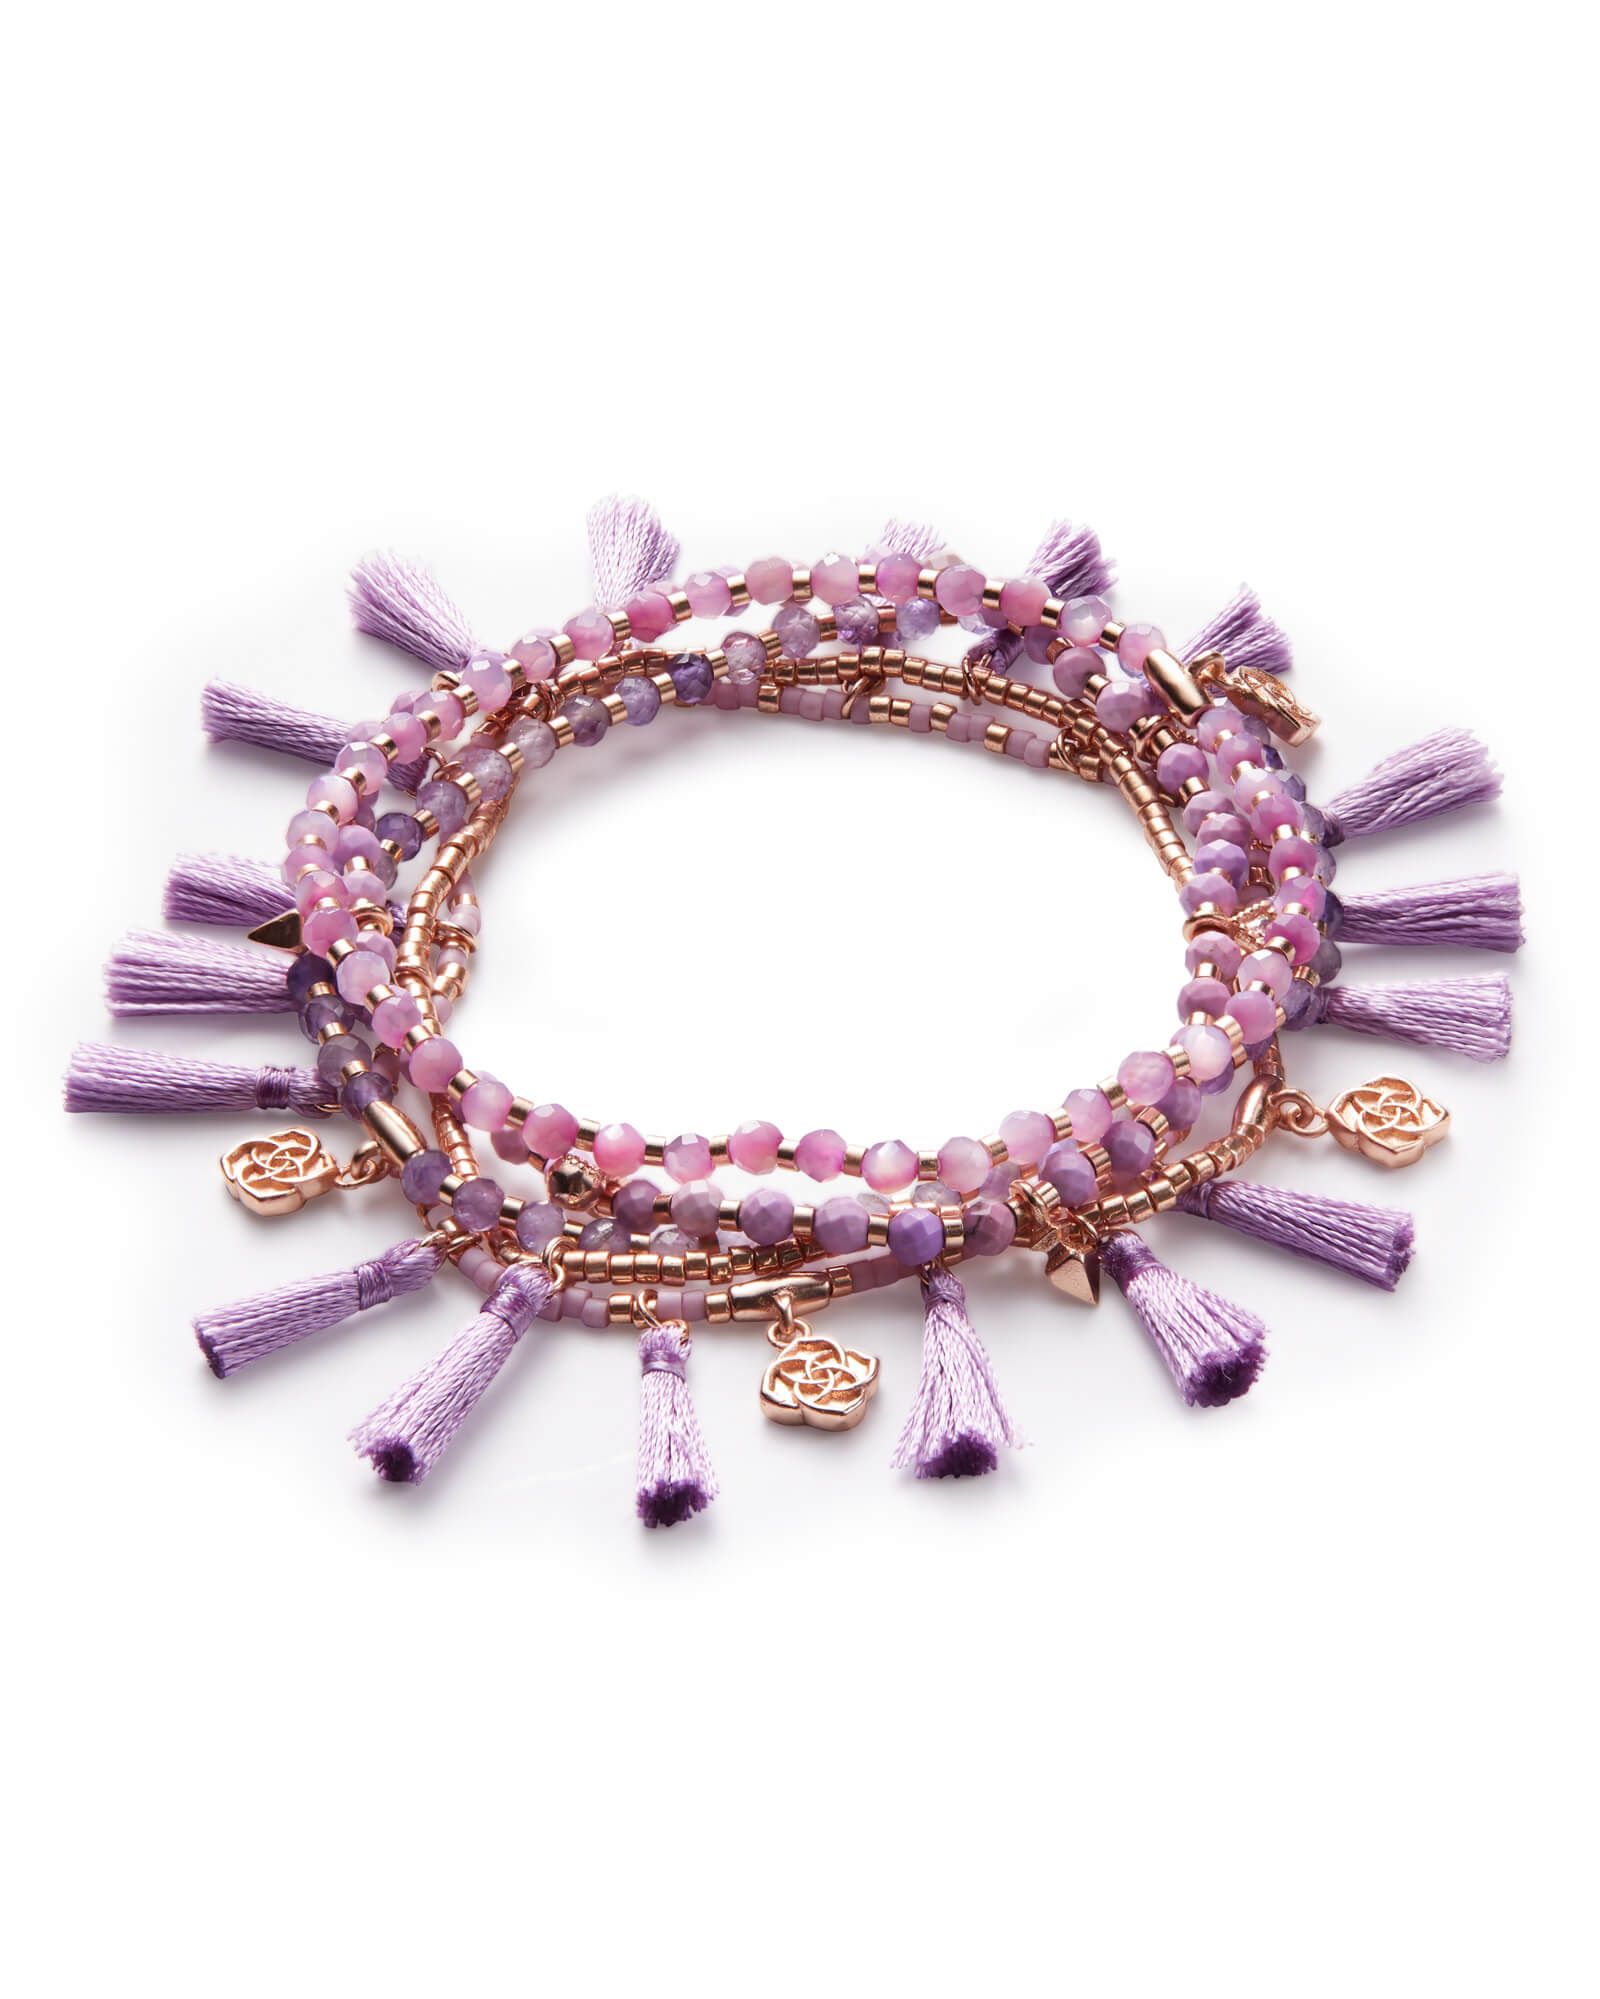 Julie Rose Gold Stretch Bracelet In Lilac Mother of Pearl Mix | Kendra Scott